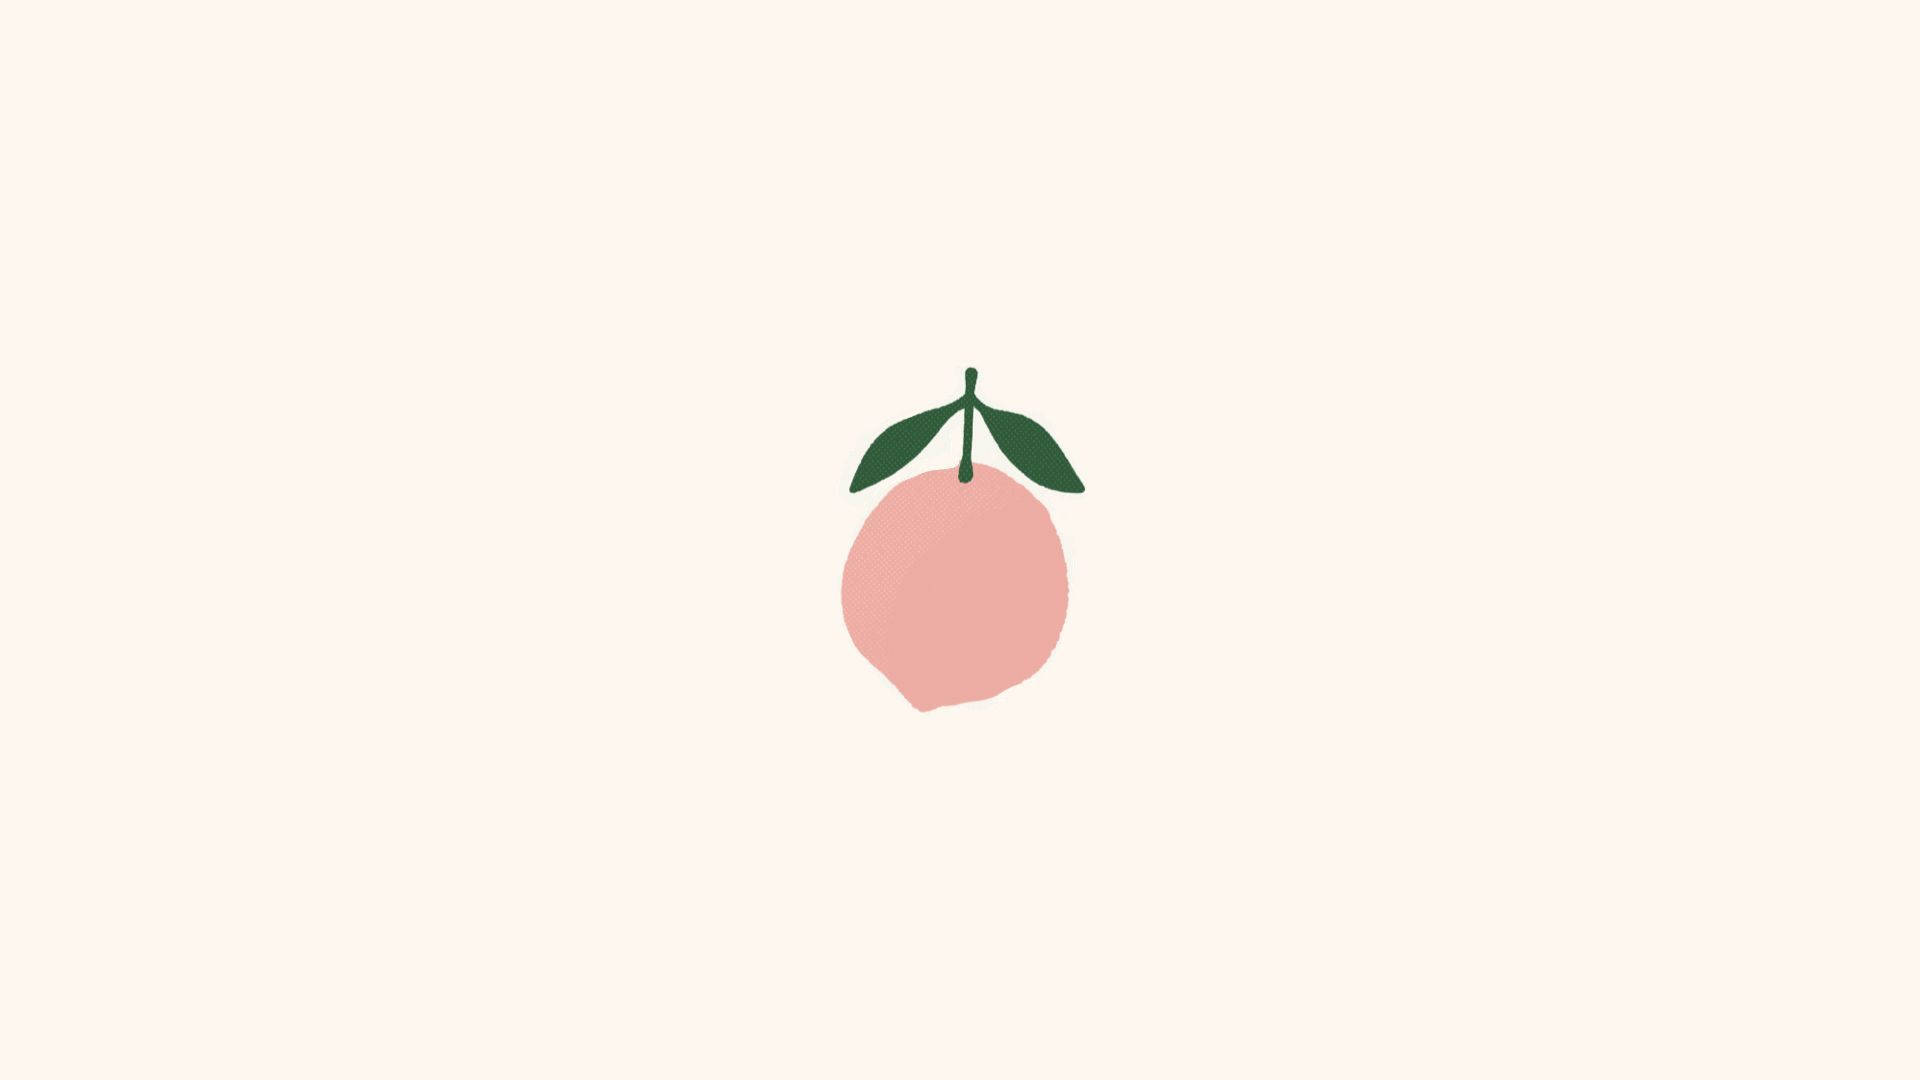 Peach Aesthetic Fruit Illustration Picture